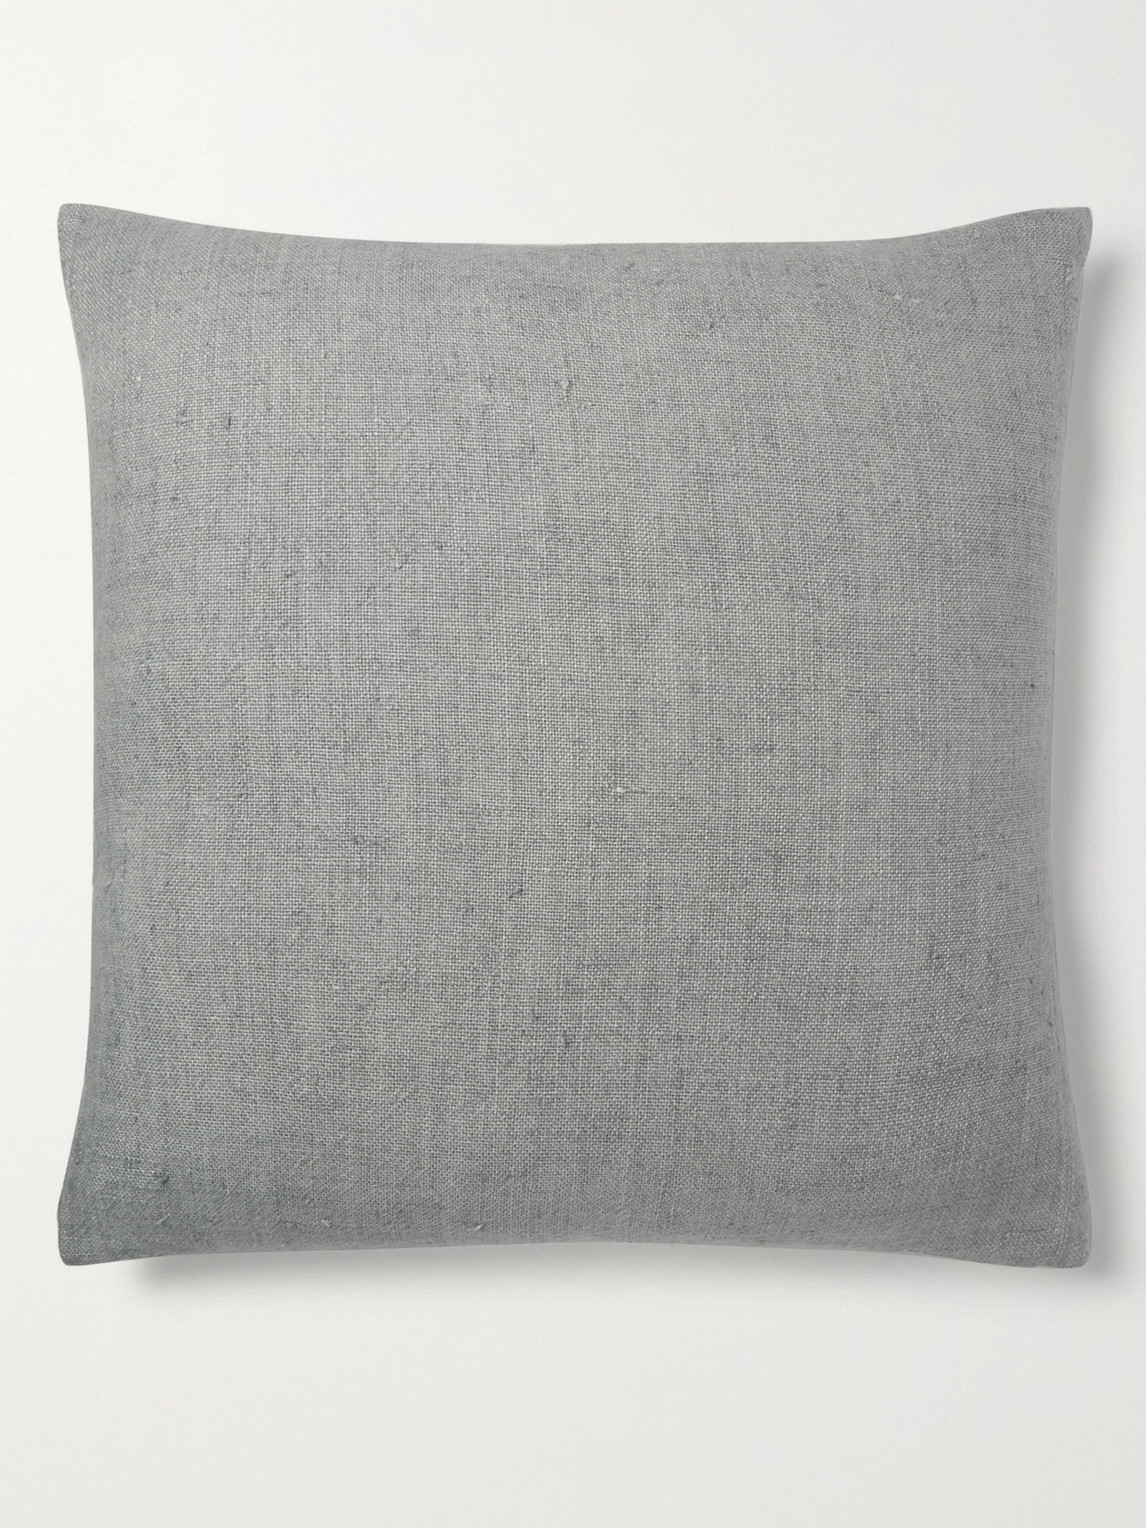 Roman & Williams Guild Linen Cushion Cover In Grey